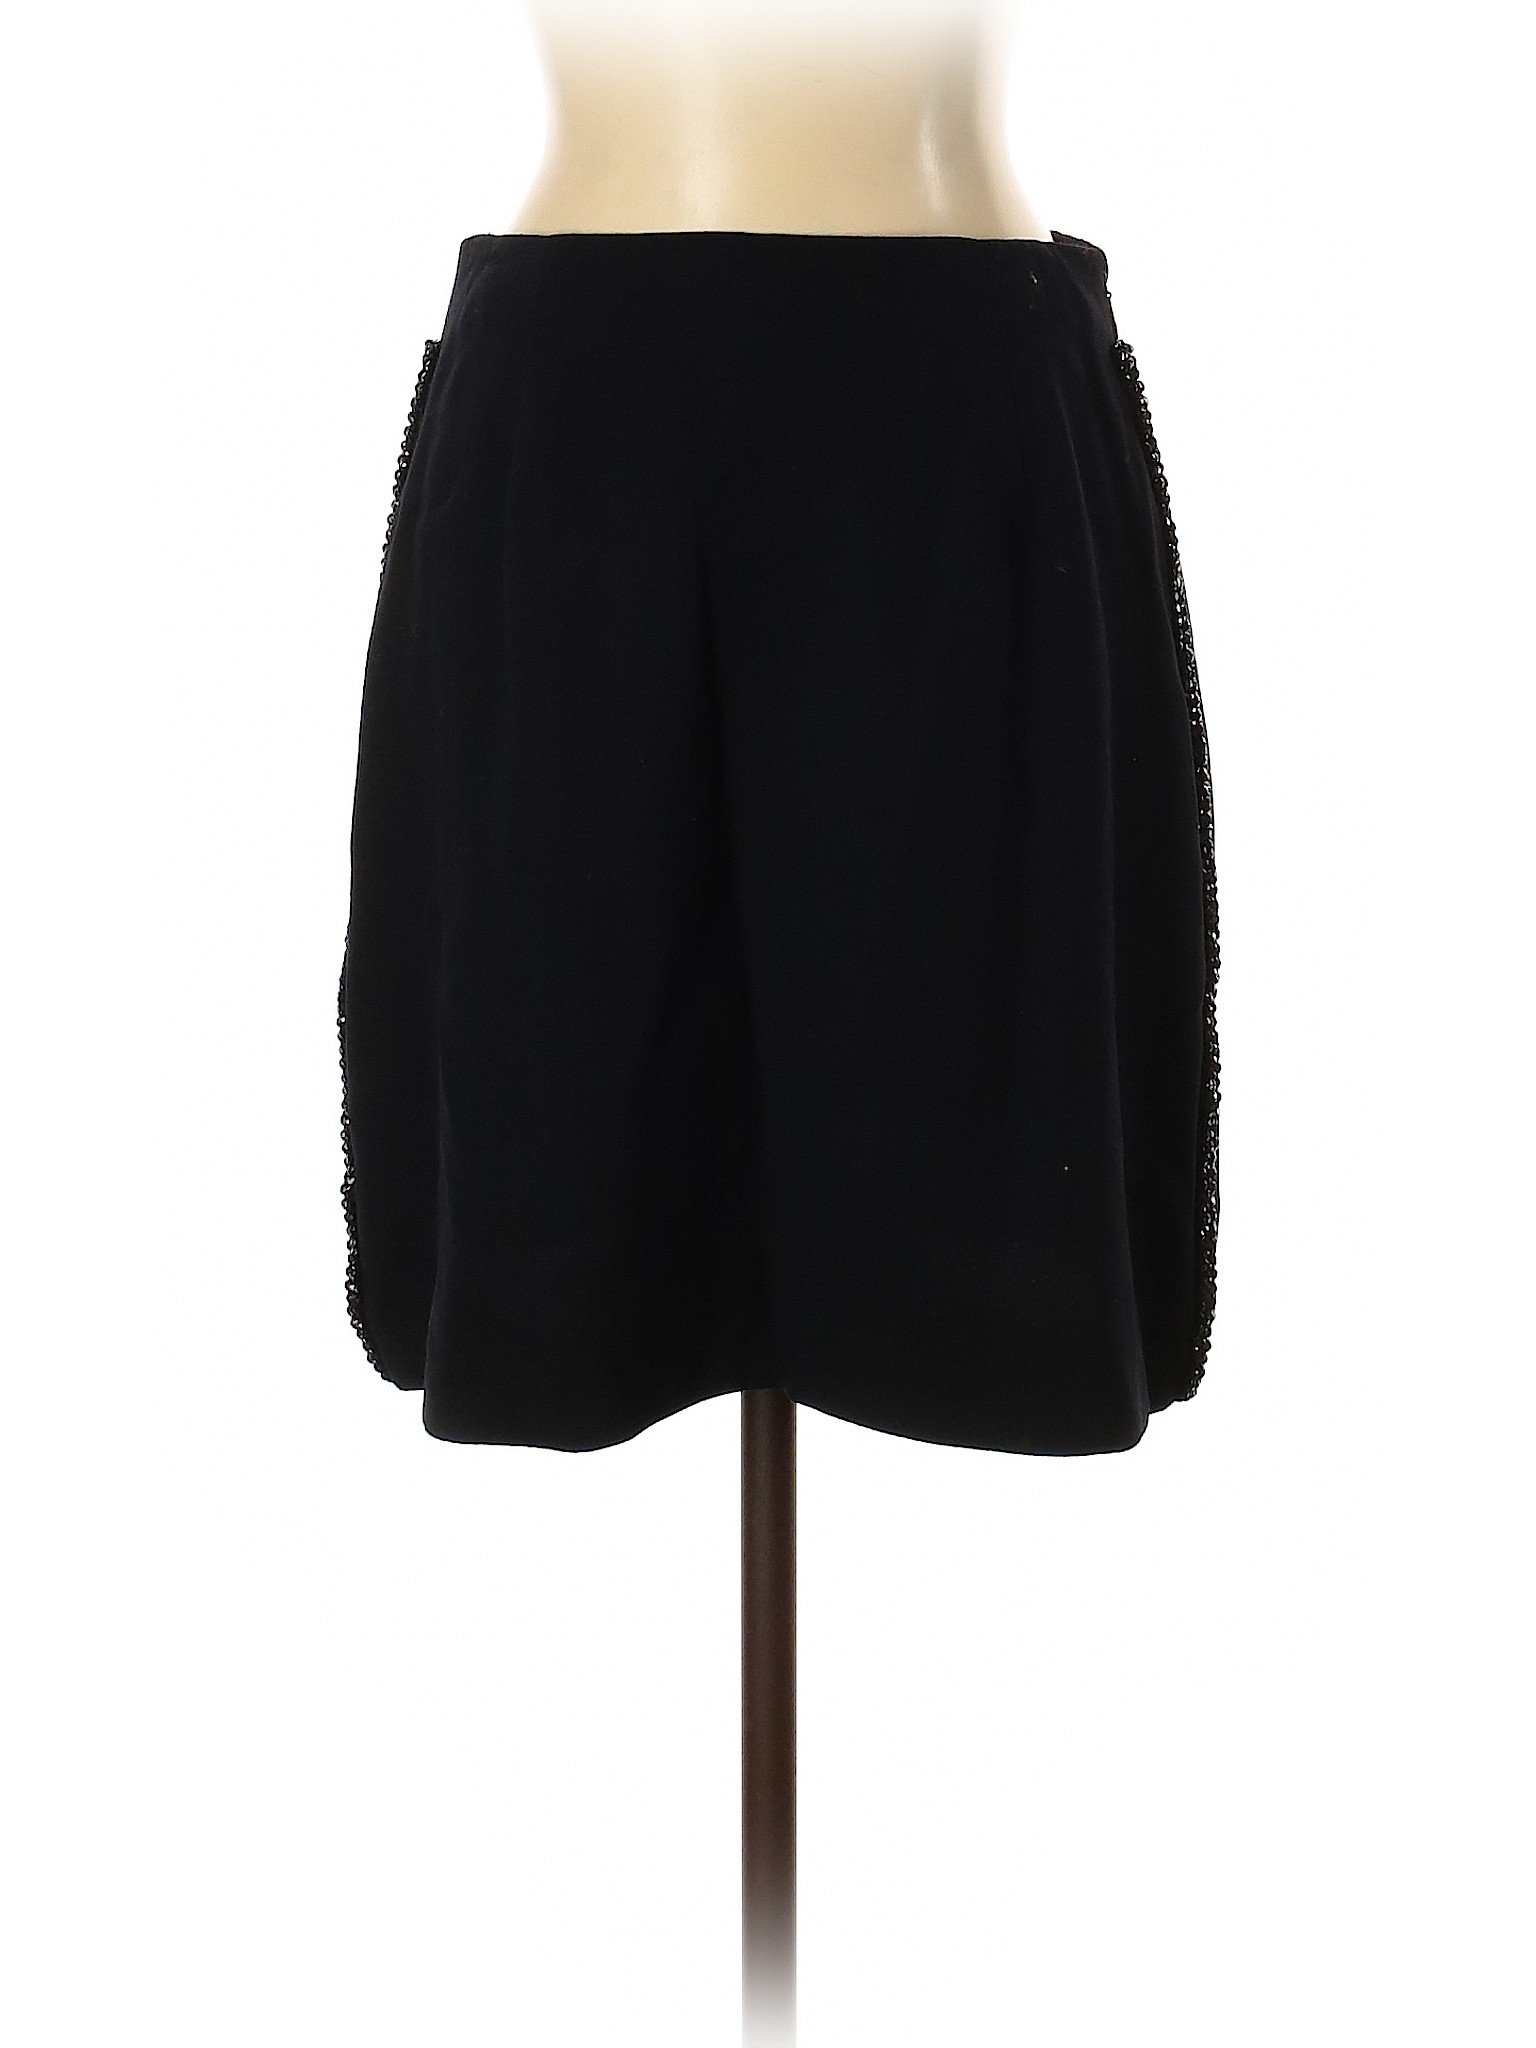 Vera Wang Women Black Casual Skirt 4 | eBay